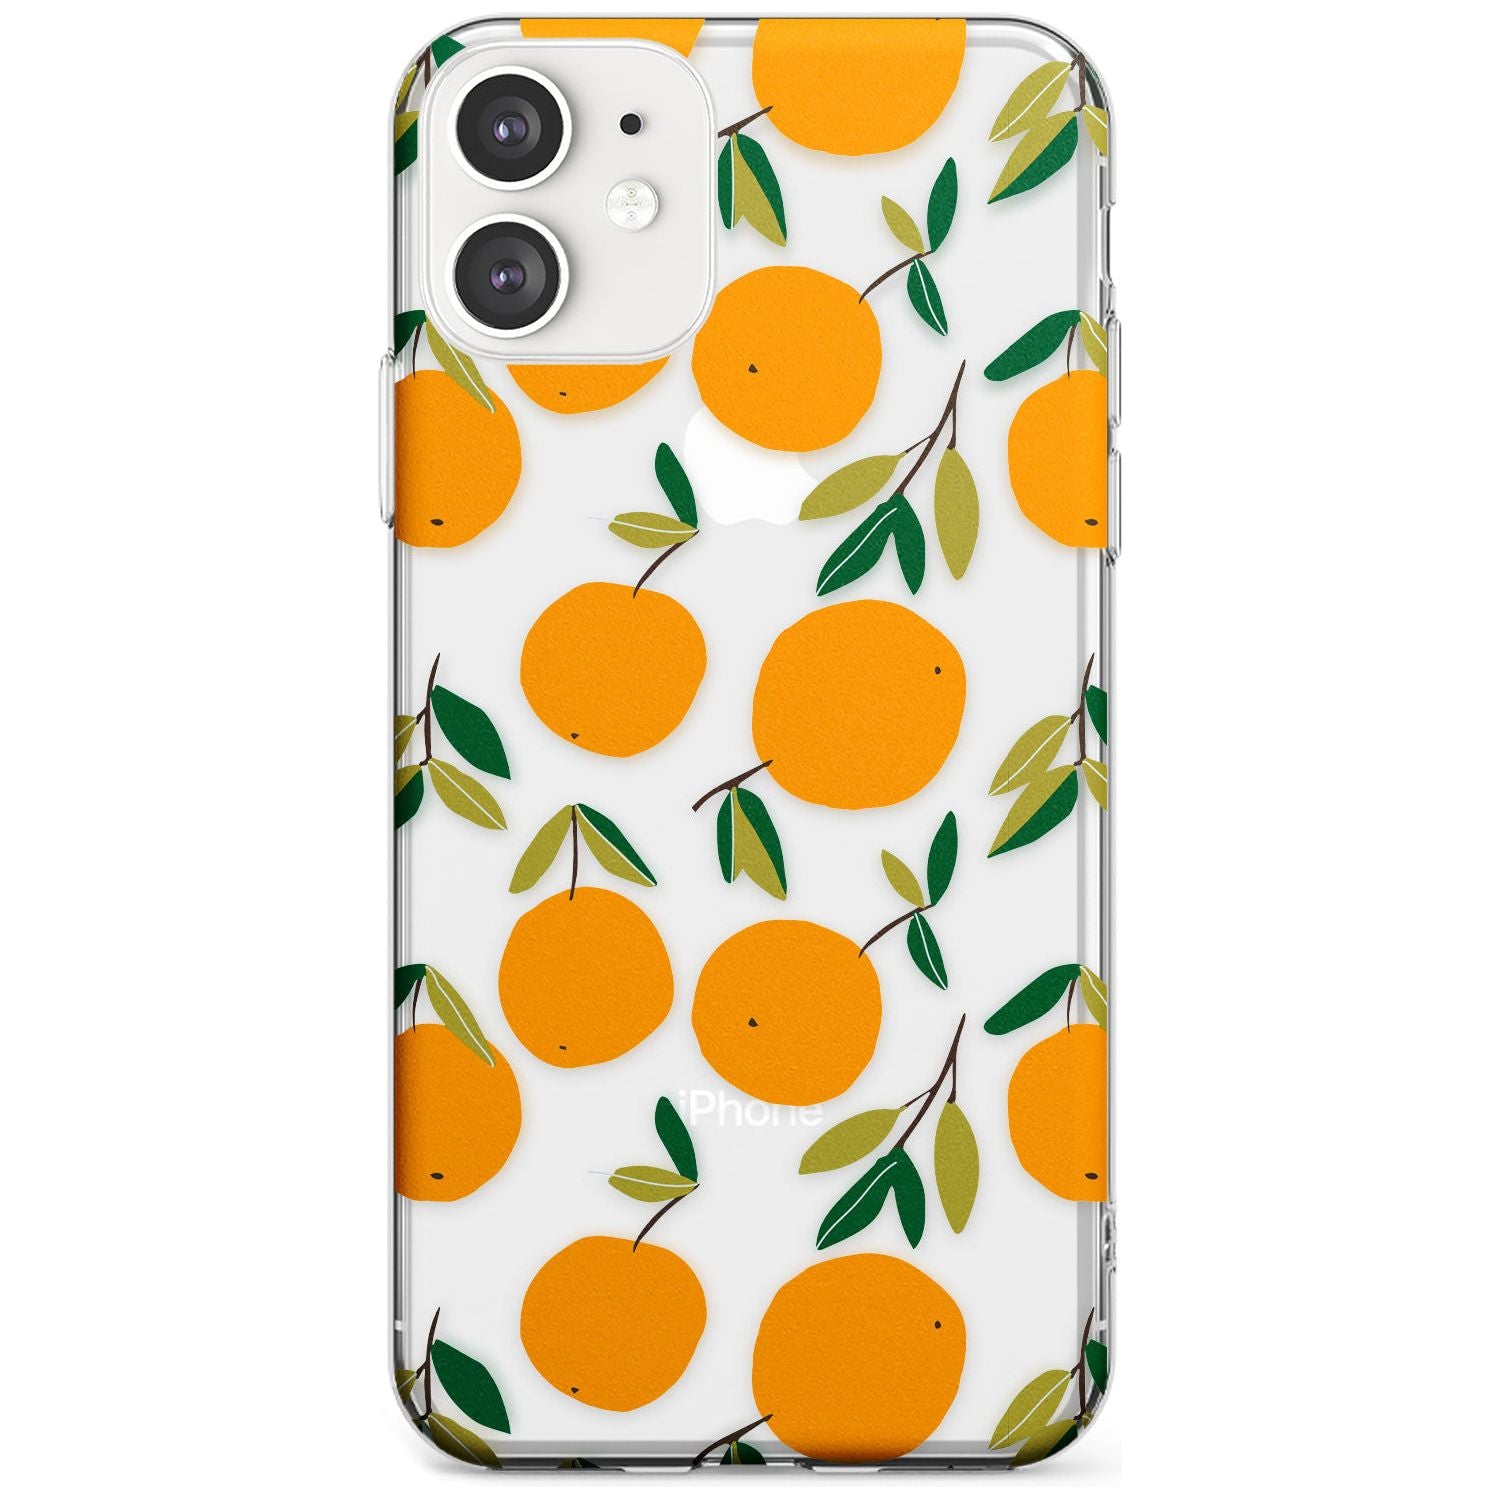 Oranges Pattern Slim TPU Phone Case for iPhone 11